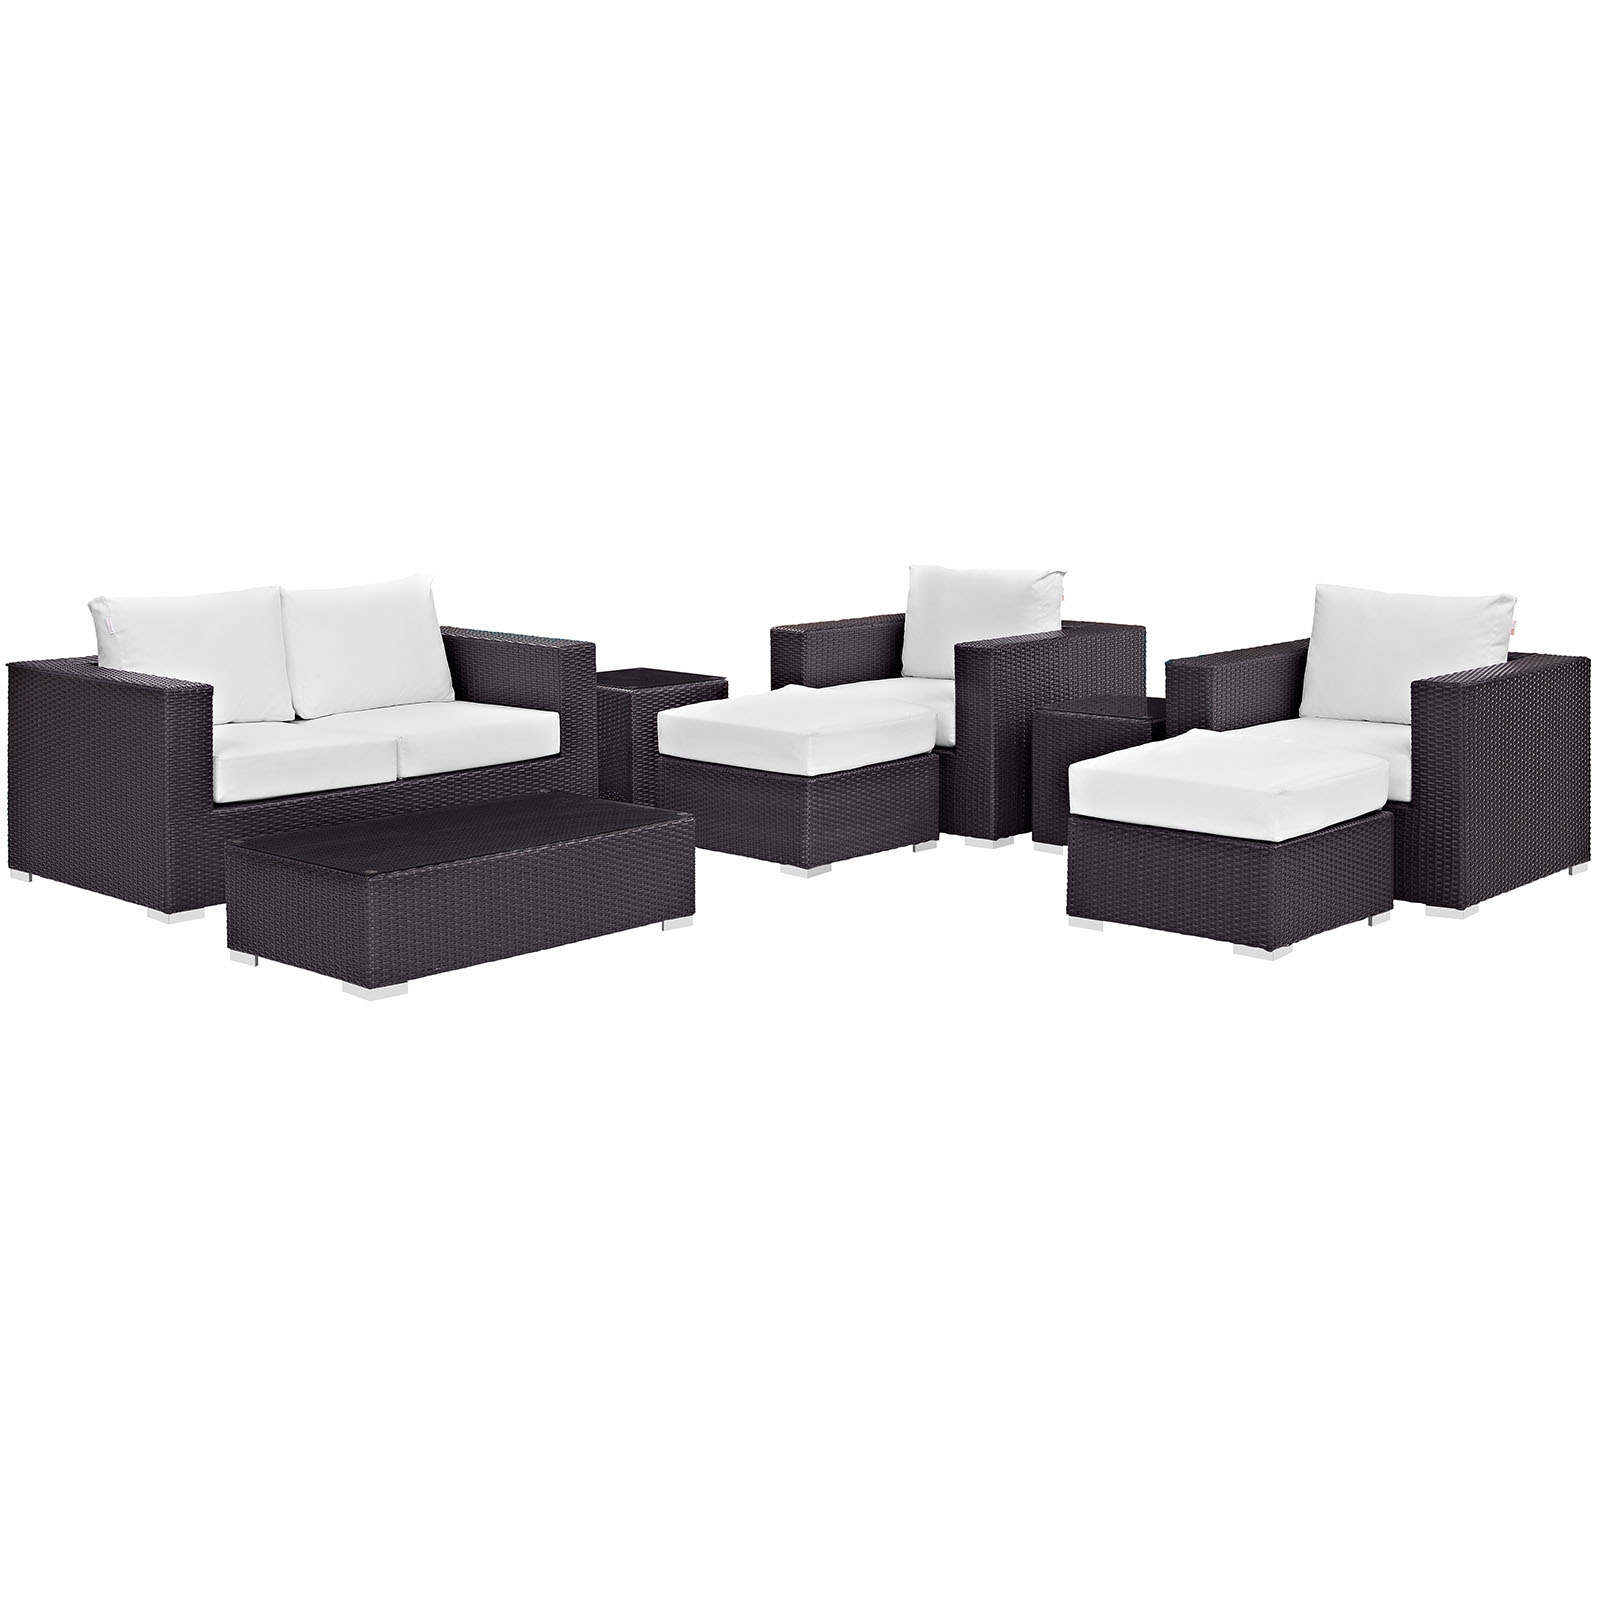 Modway Convene 8 Piece Outdoor Patio Sofa Set in Espresso White - image 2 of 9